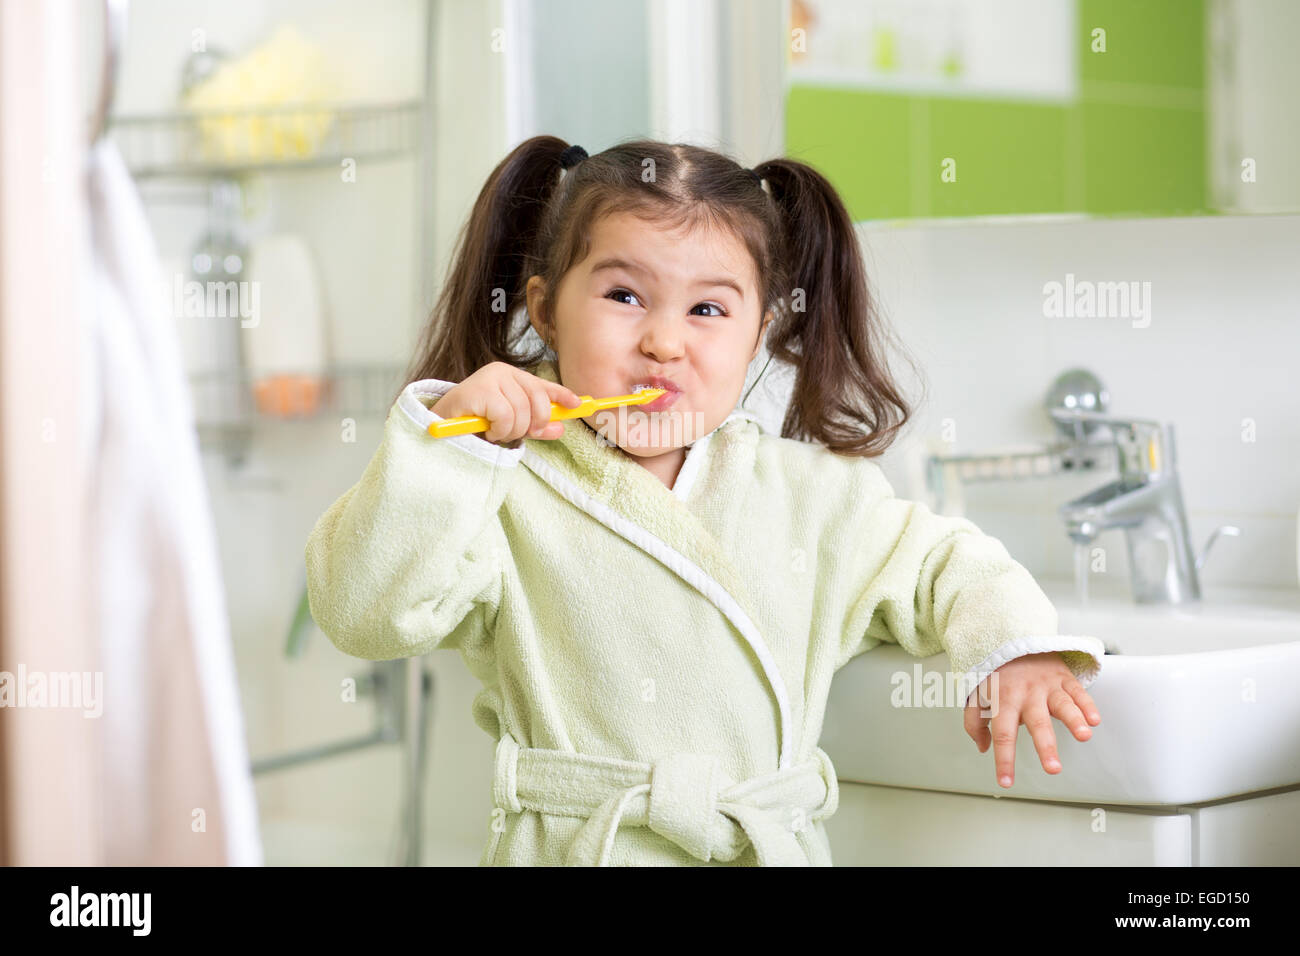 Smiling little girl brushing teeth in bathroom Stock Photo